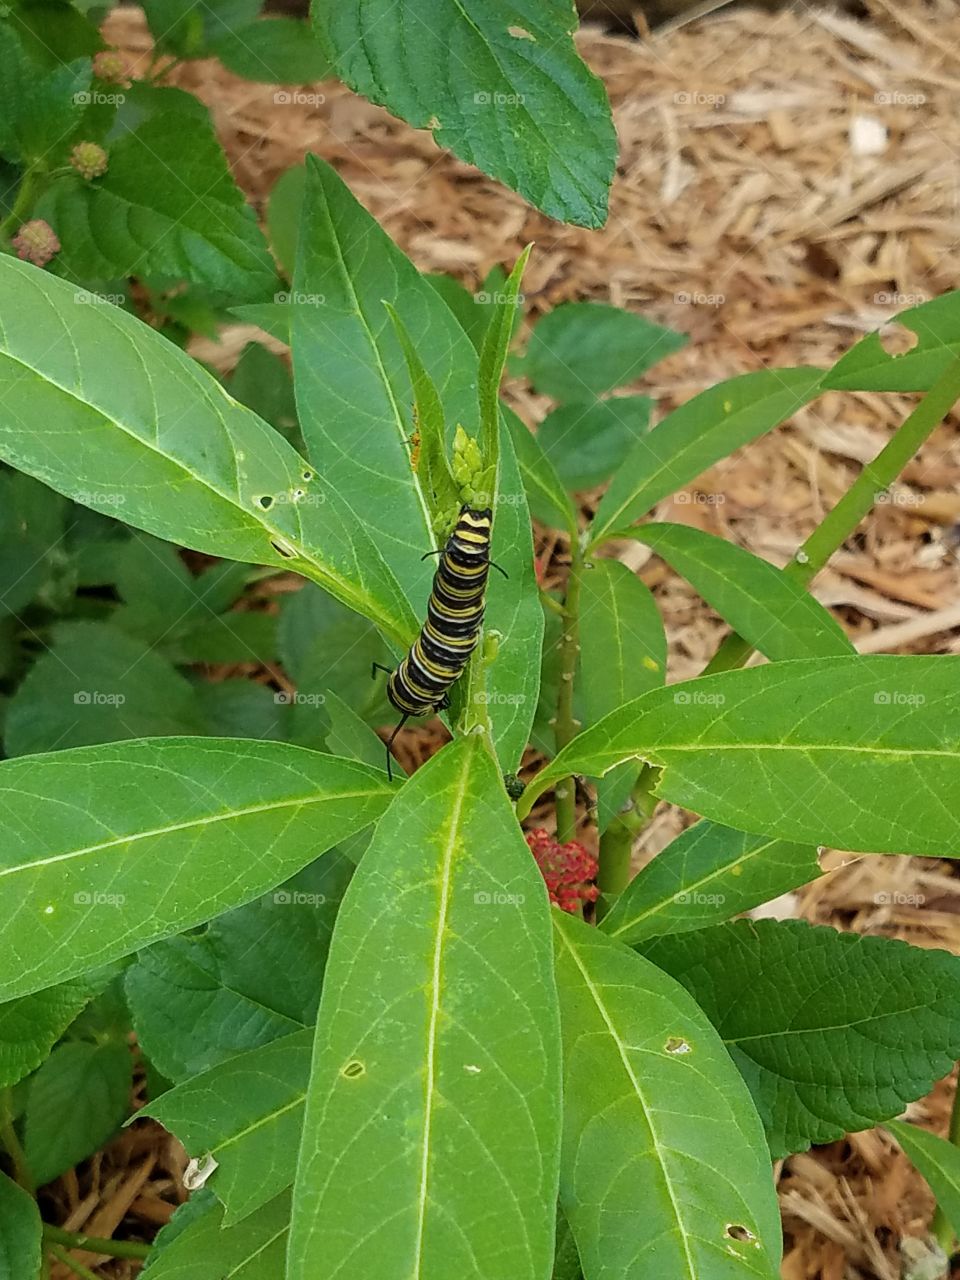 Monarch Caterpillar chows down